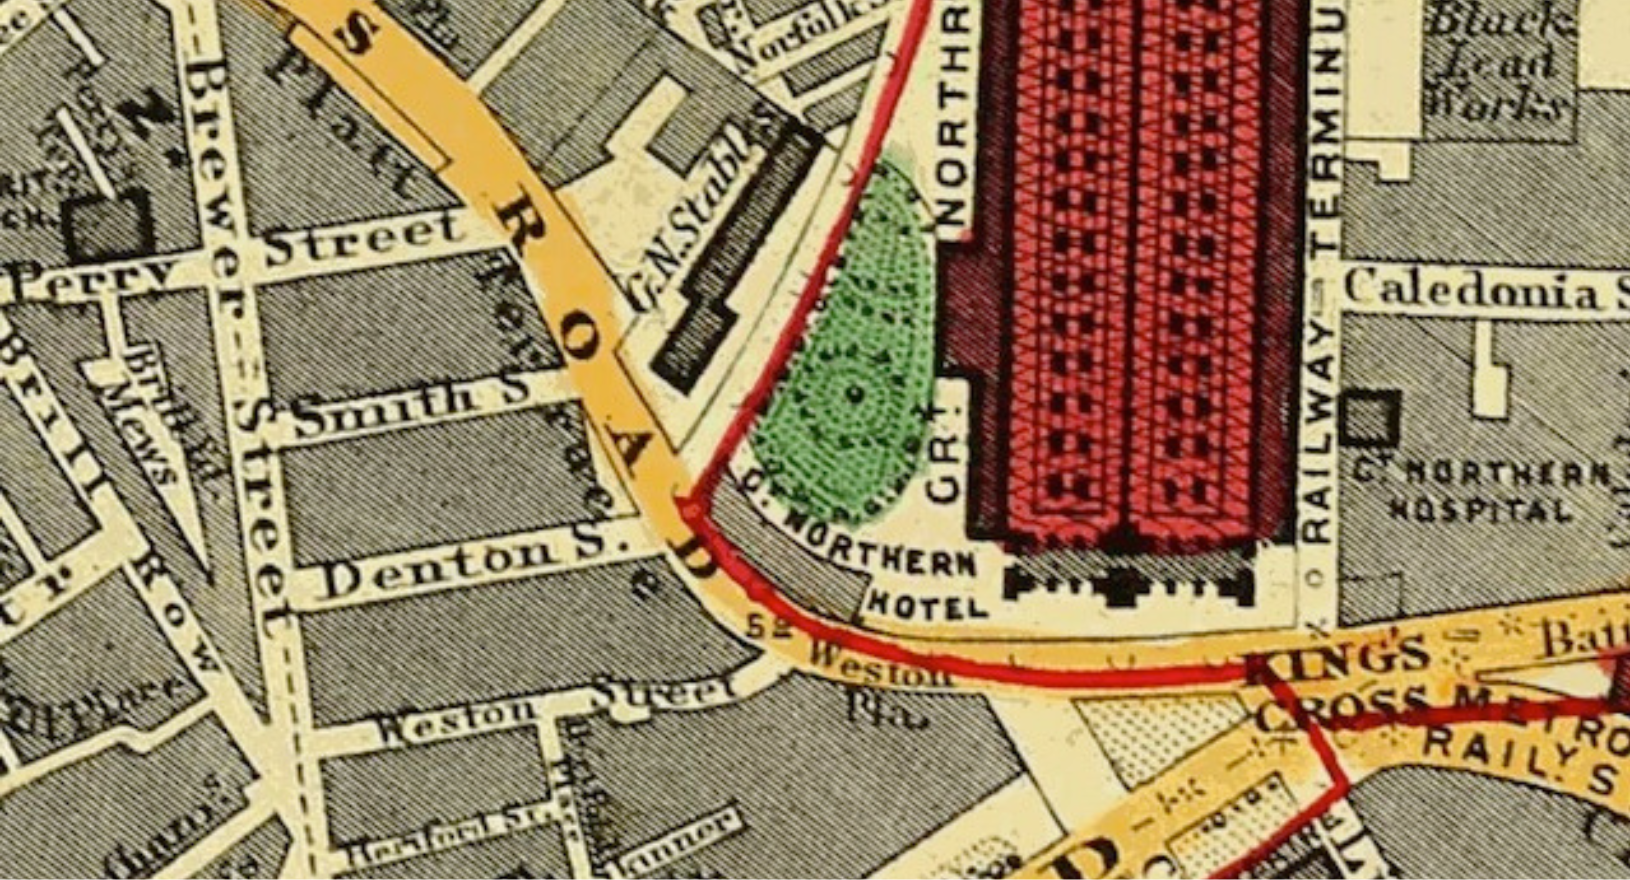 Pancras Road Map 1862